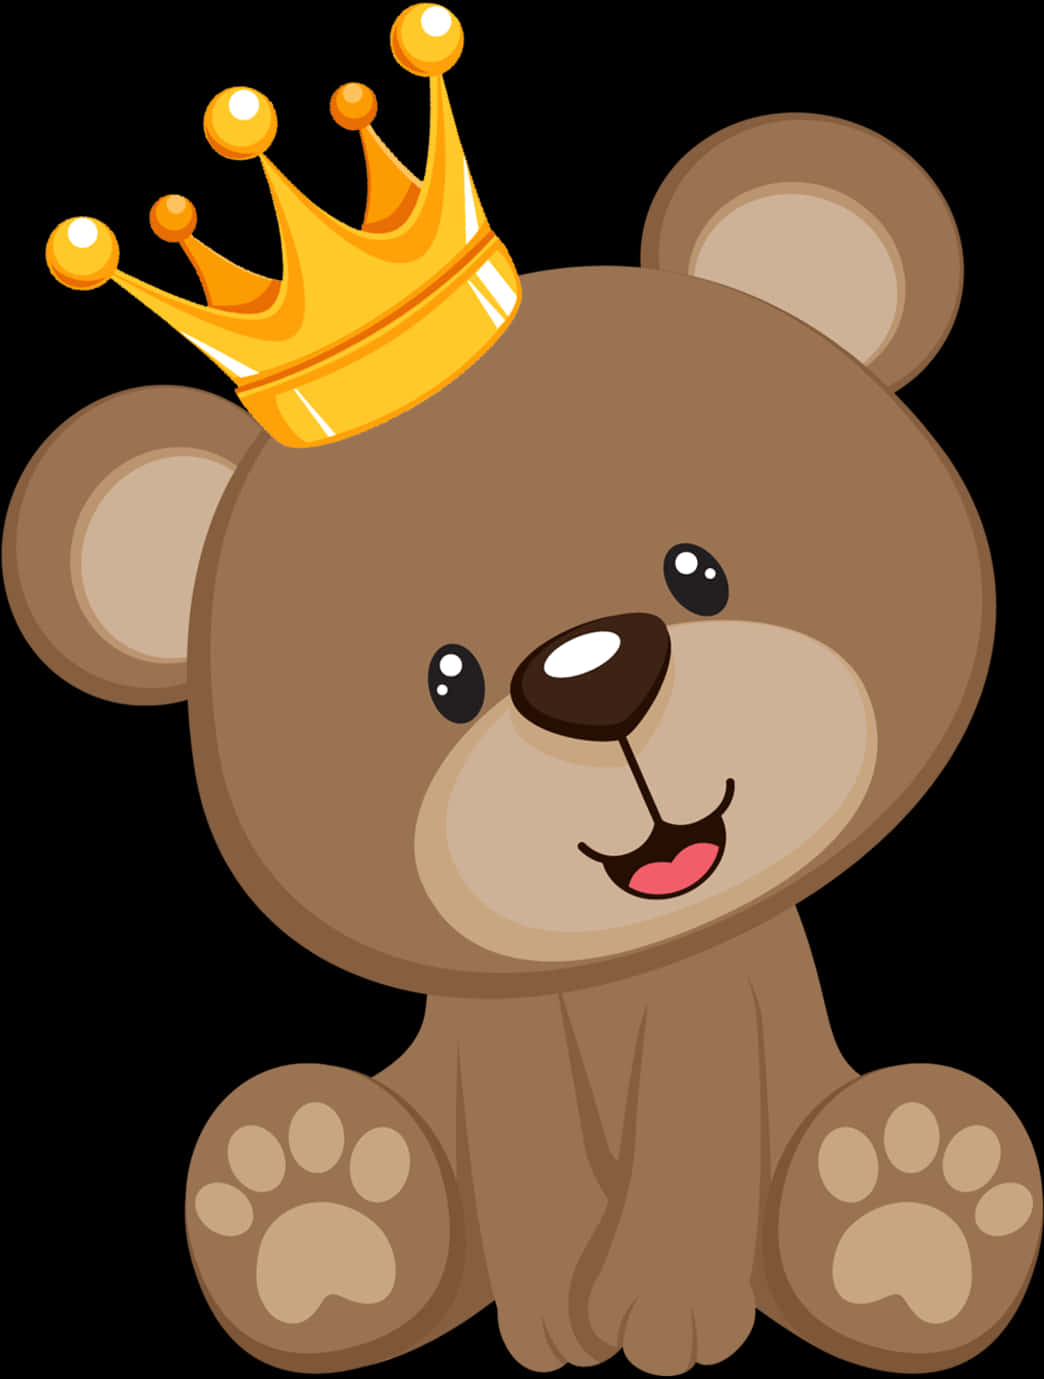 Royal Teddy Bear Cartoon PNG image